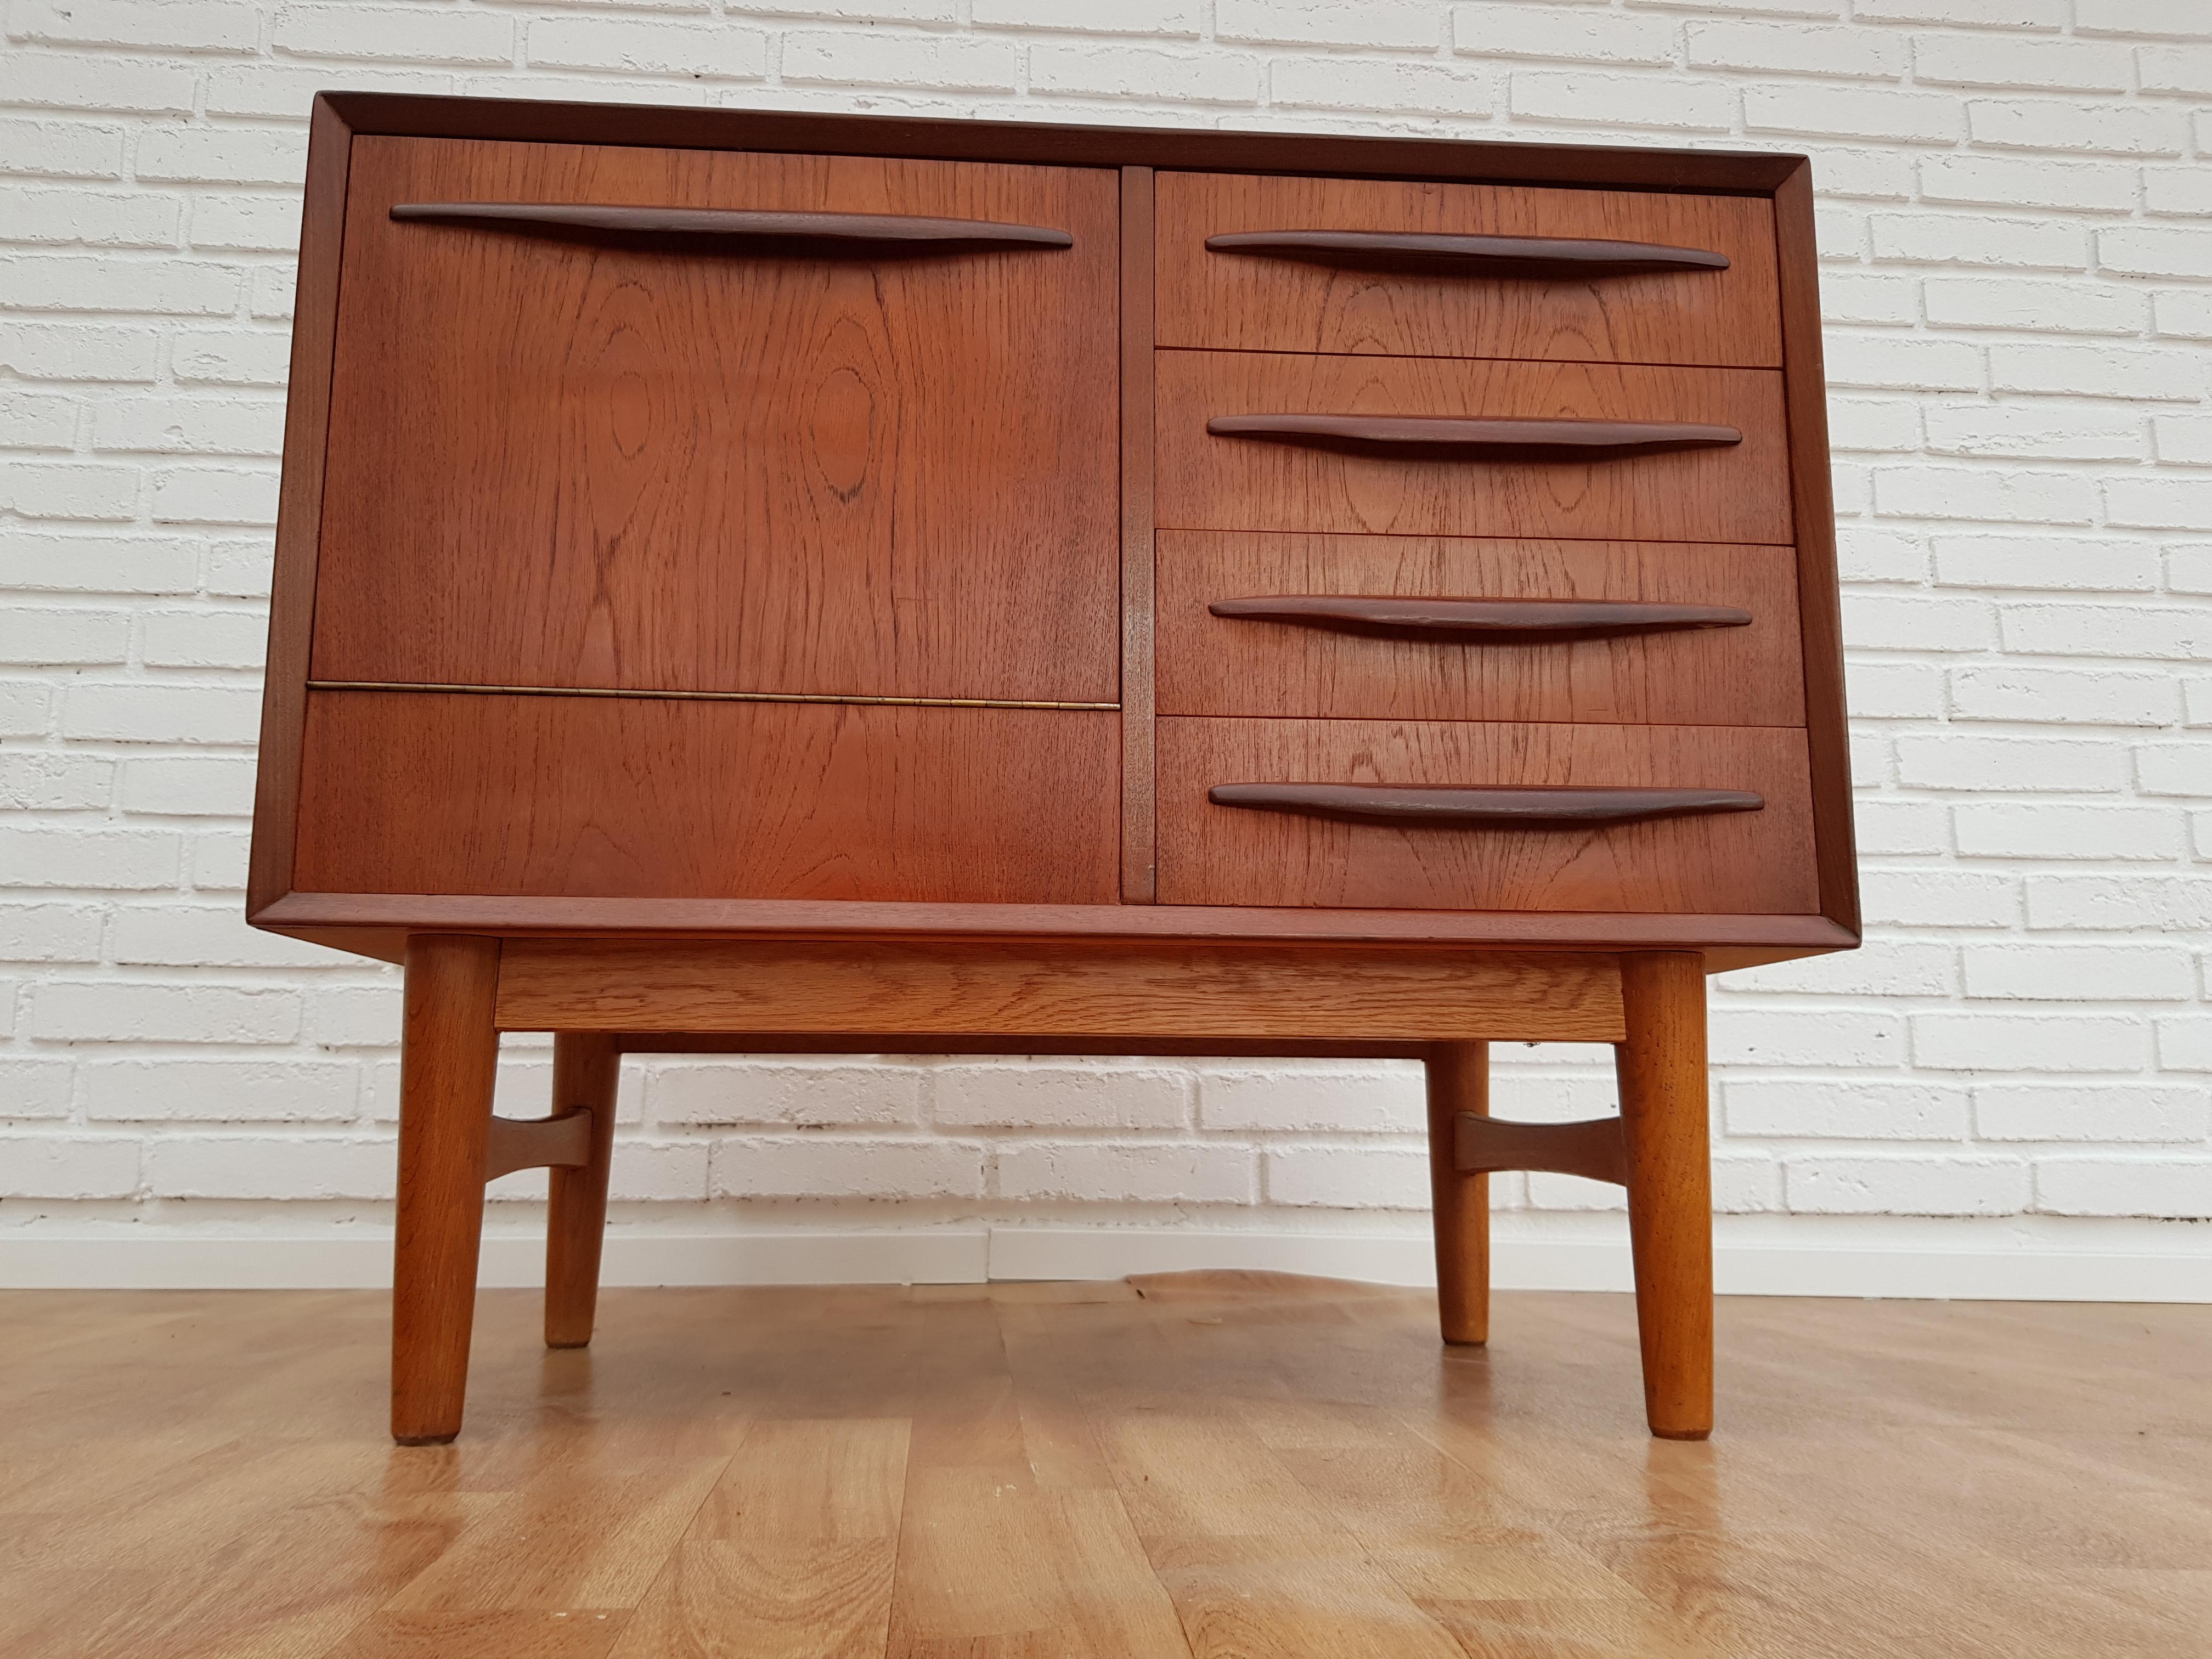 Vintage Chest, Danish Design, Teak Wood, 1960s For Sale 2